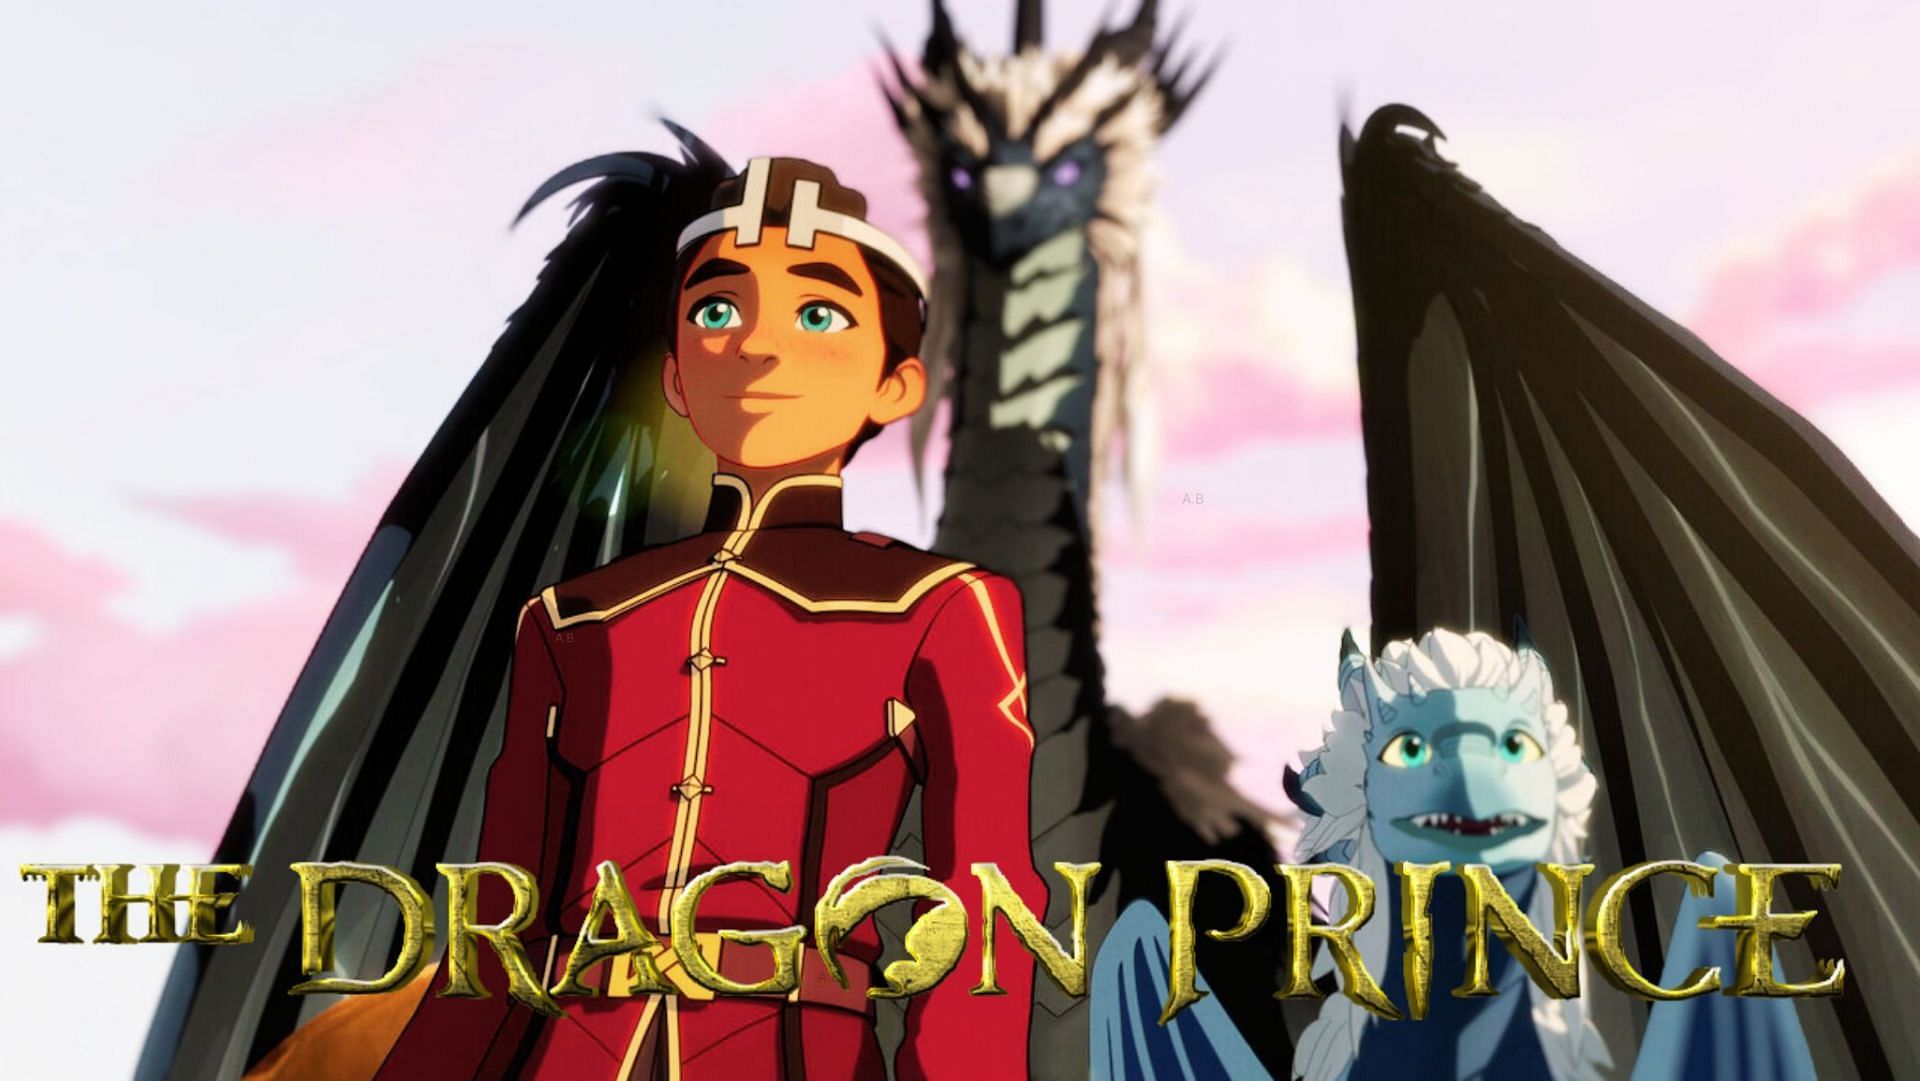 The saga continues: A deep dive into The Dragon Prince